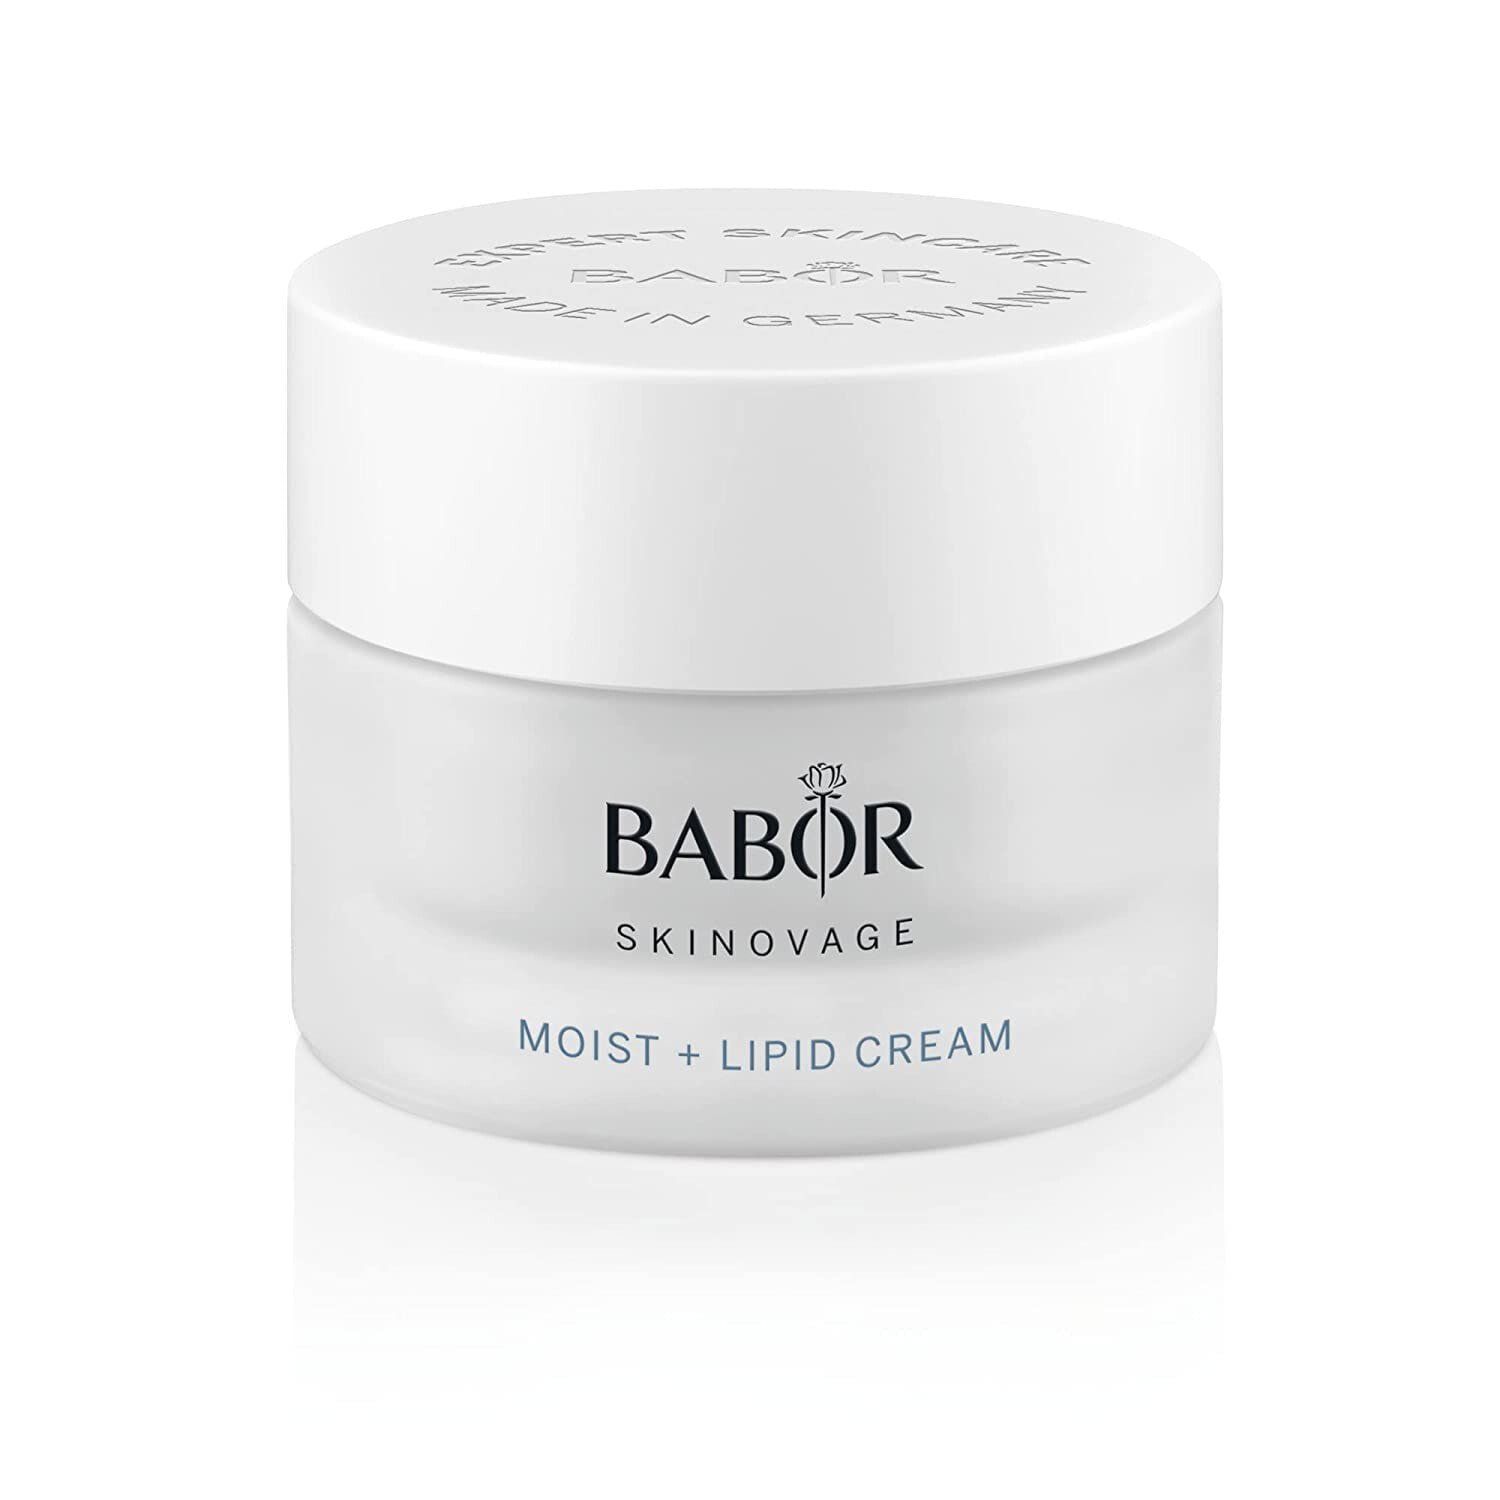 BABOR Skinovage Moist & Lipid Cream, Rich Face Cream for Dry Skin